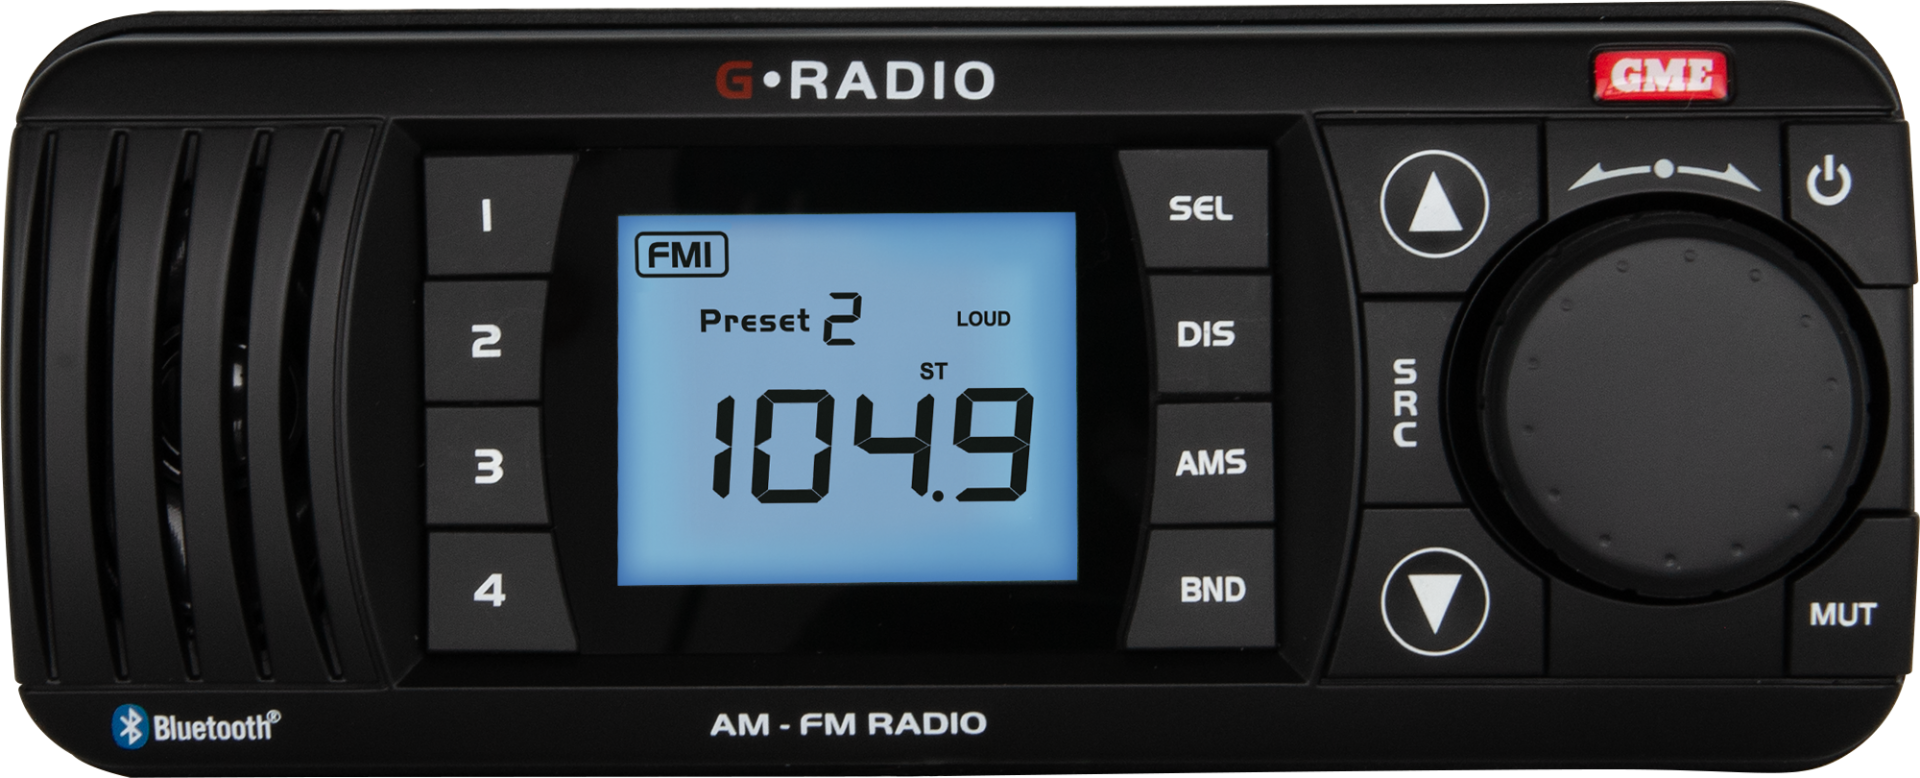 GR300BTB - Bluetooth AM/FM Marine Stereo - Black